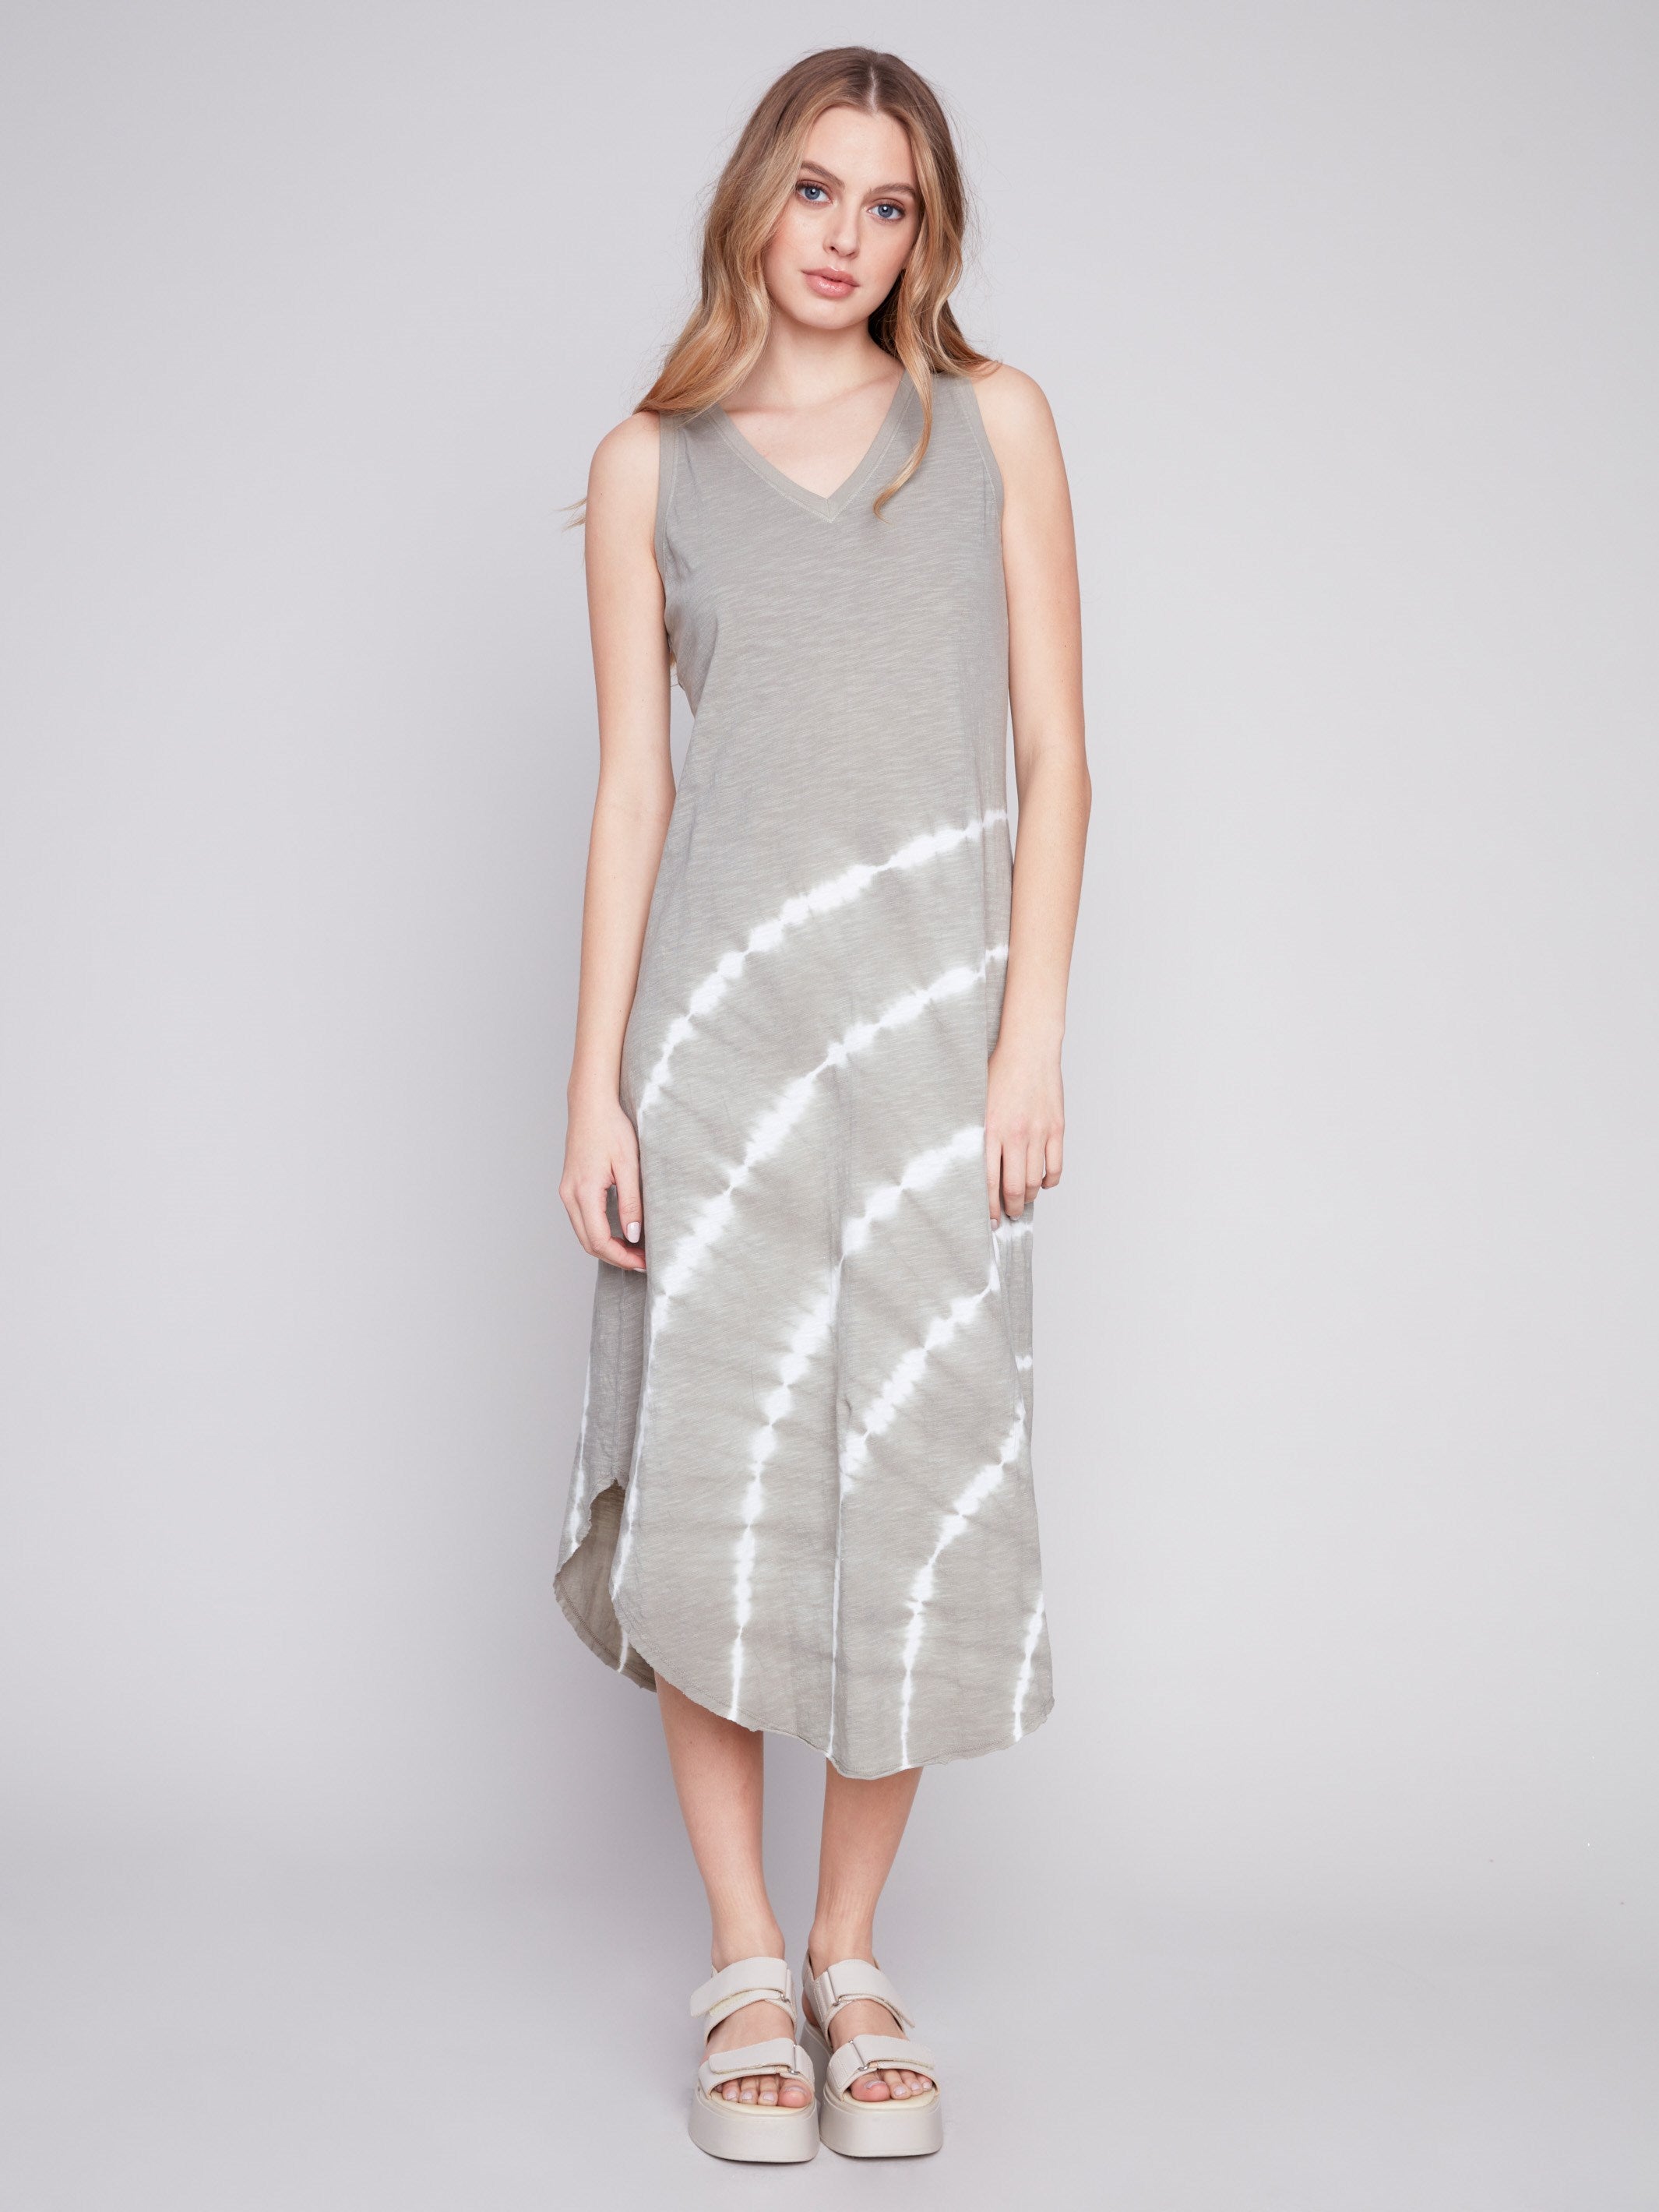 Charlie B Printed Sleeveless Cotton Dress - Celadon - Image 1